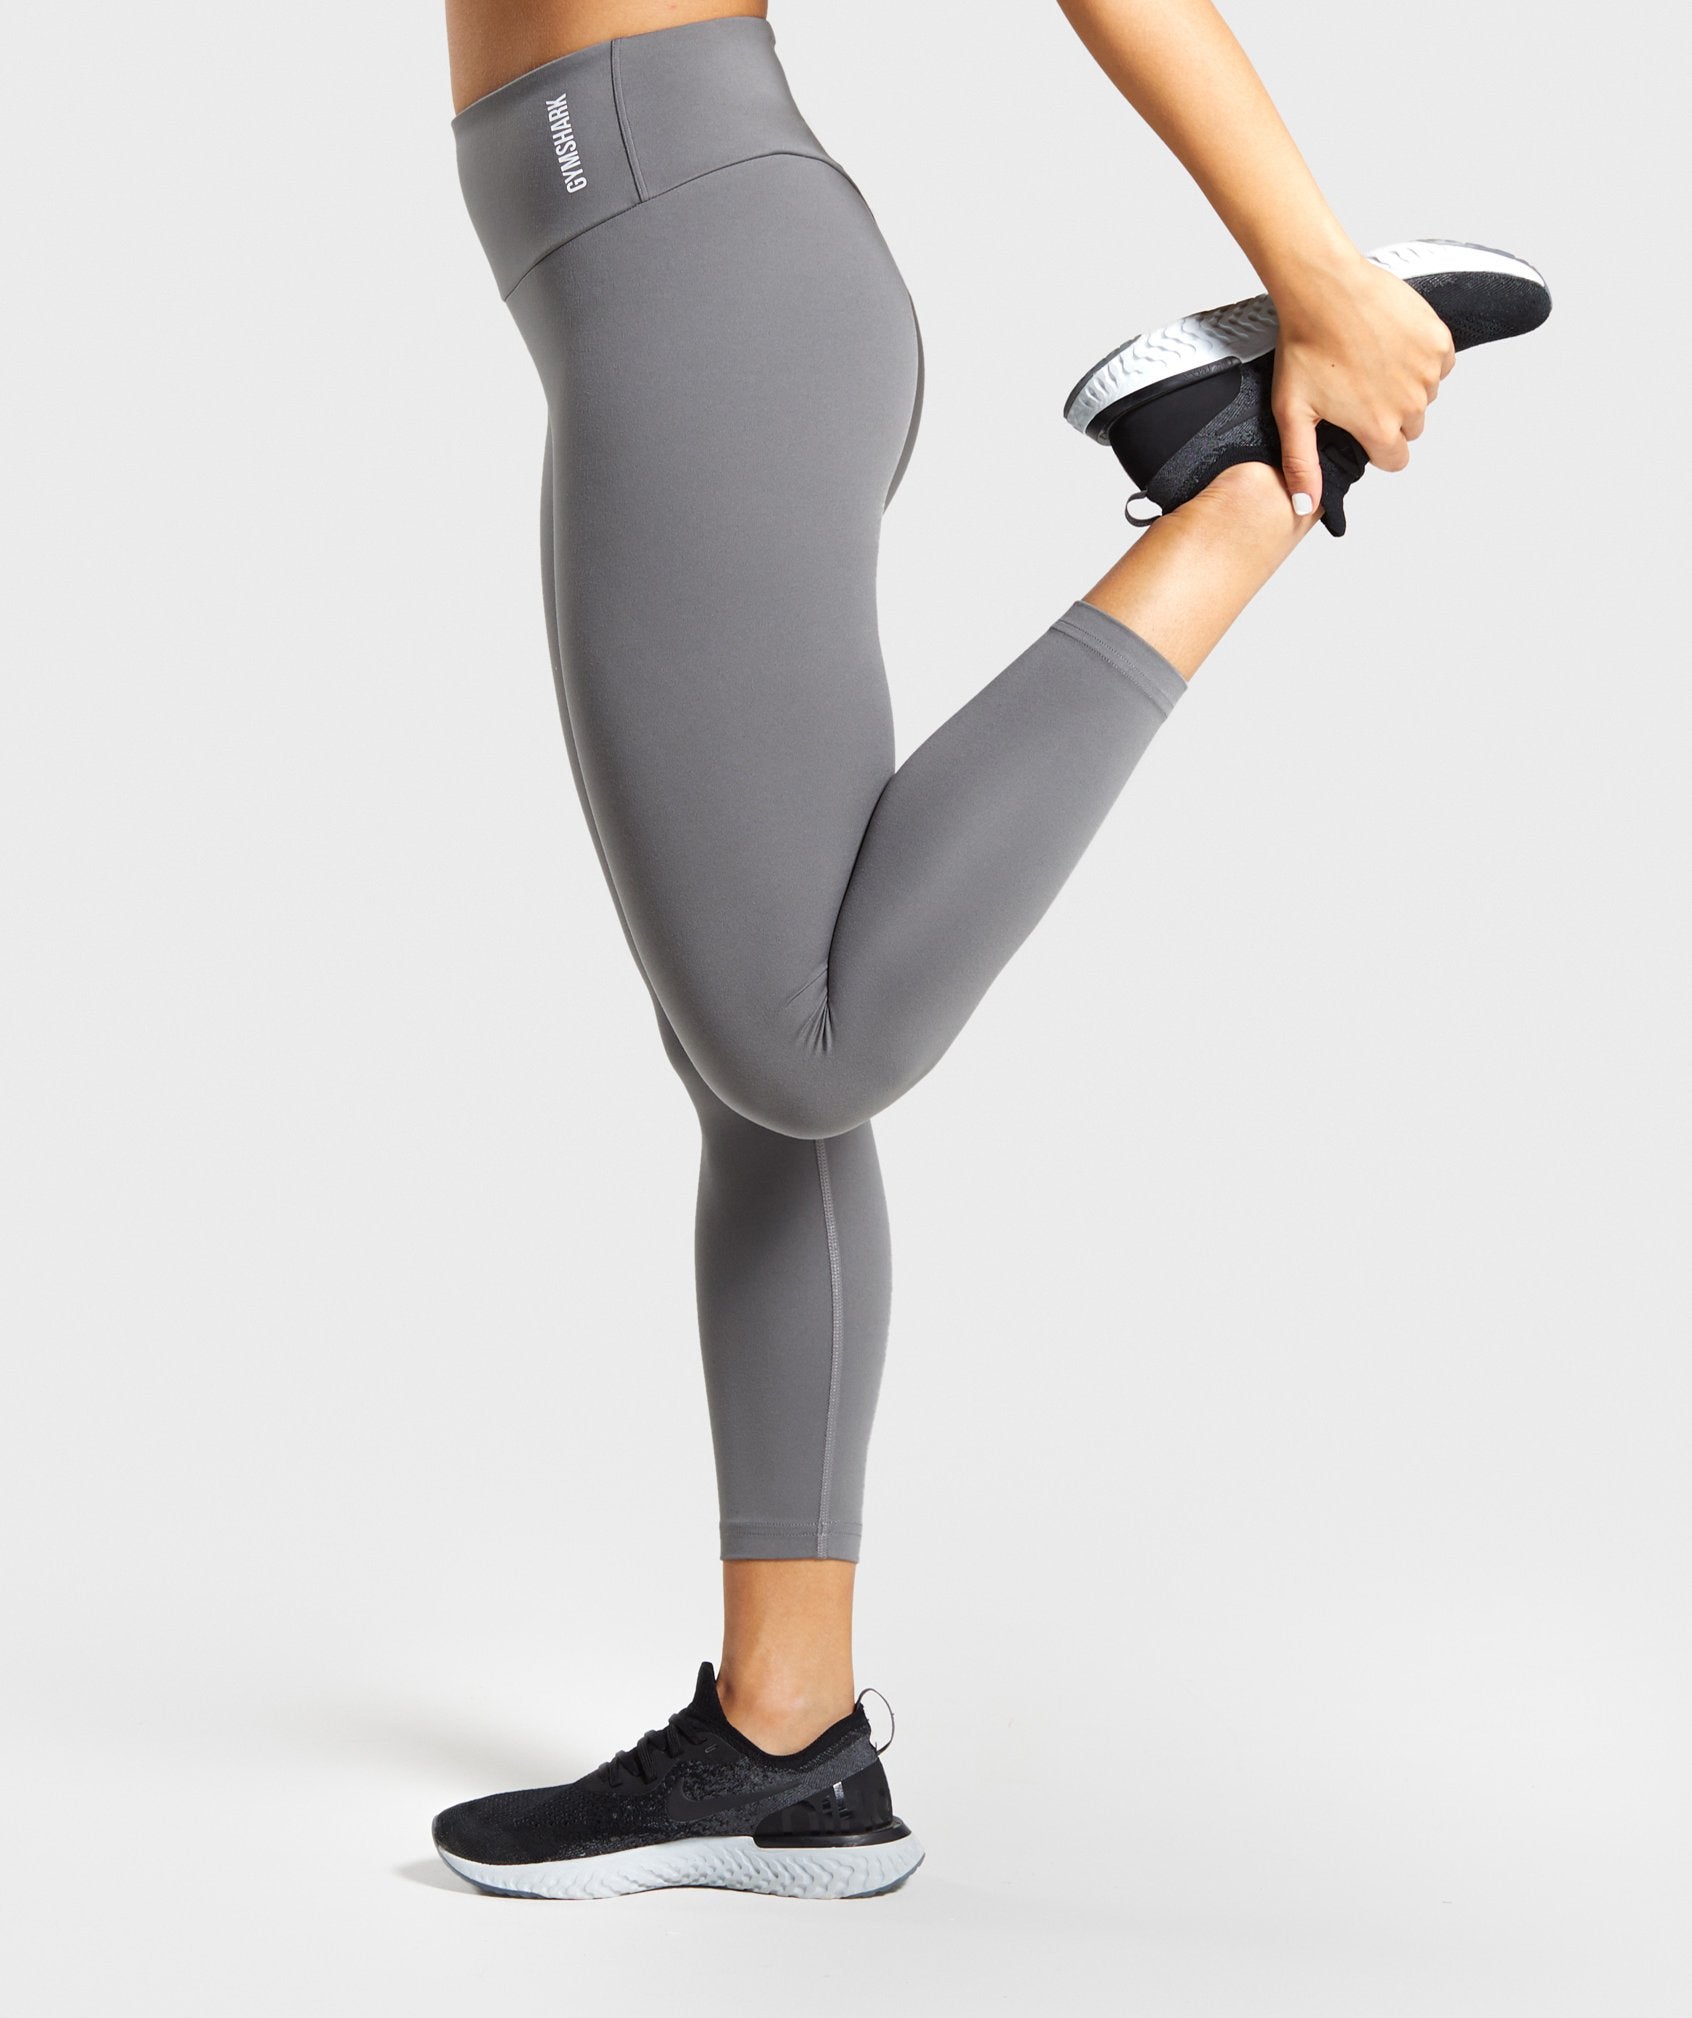 Women's training leggings Gymshark Speed charcoal grey 